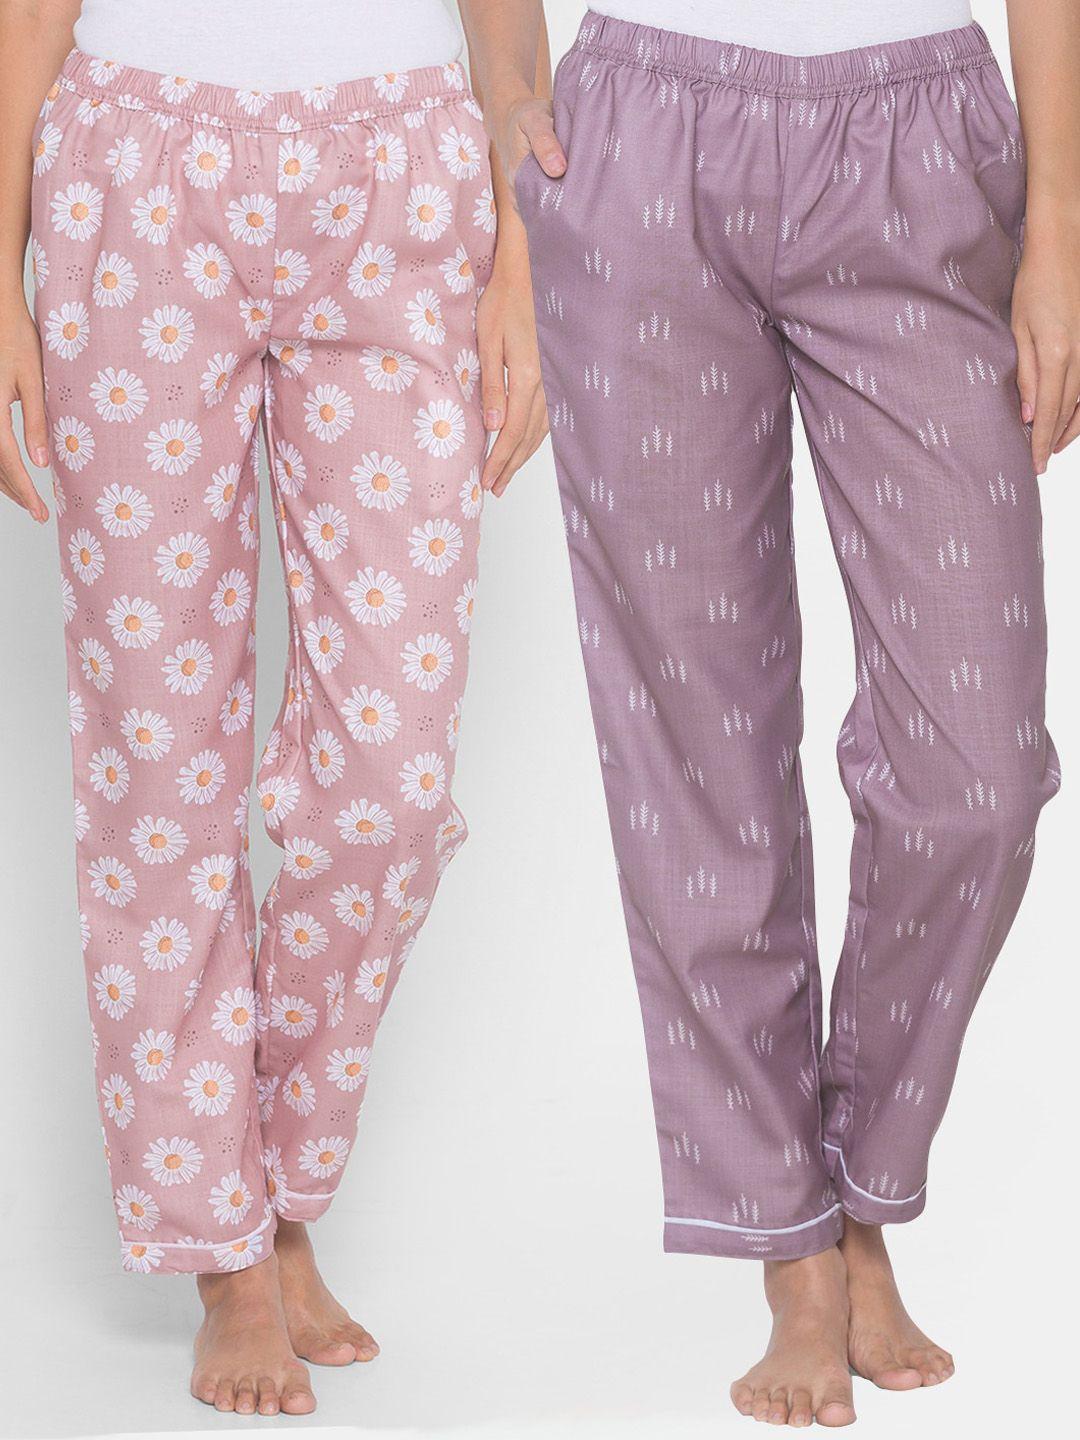 fashionrack-women-set-of-2-printed-cotton-lounge-pants